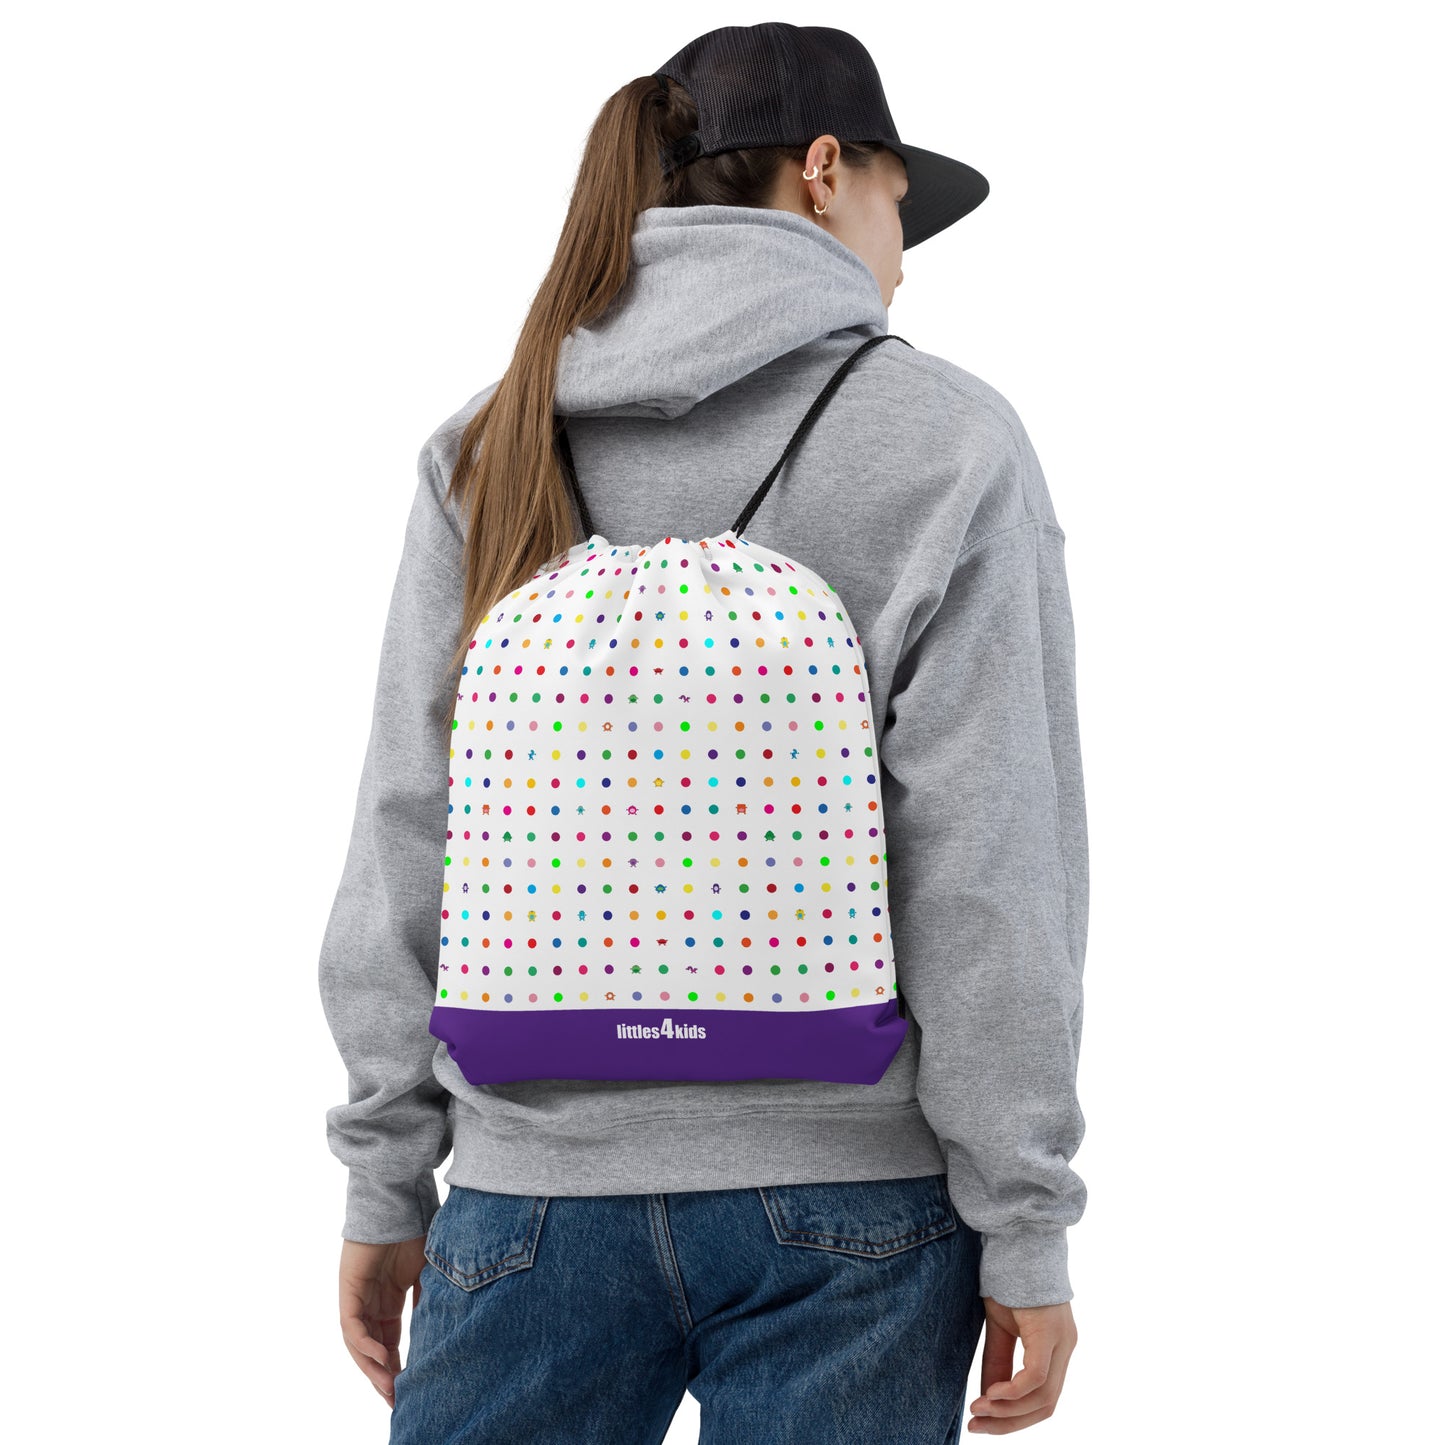 White Small Dot Monster drawstring bag purple bottom woman carrying